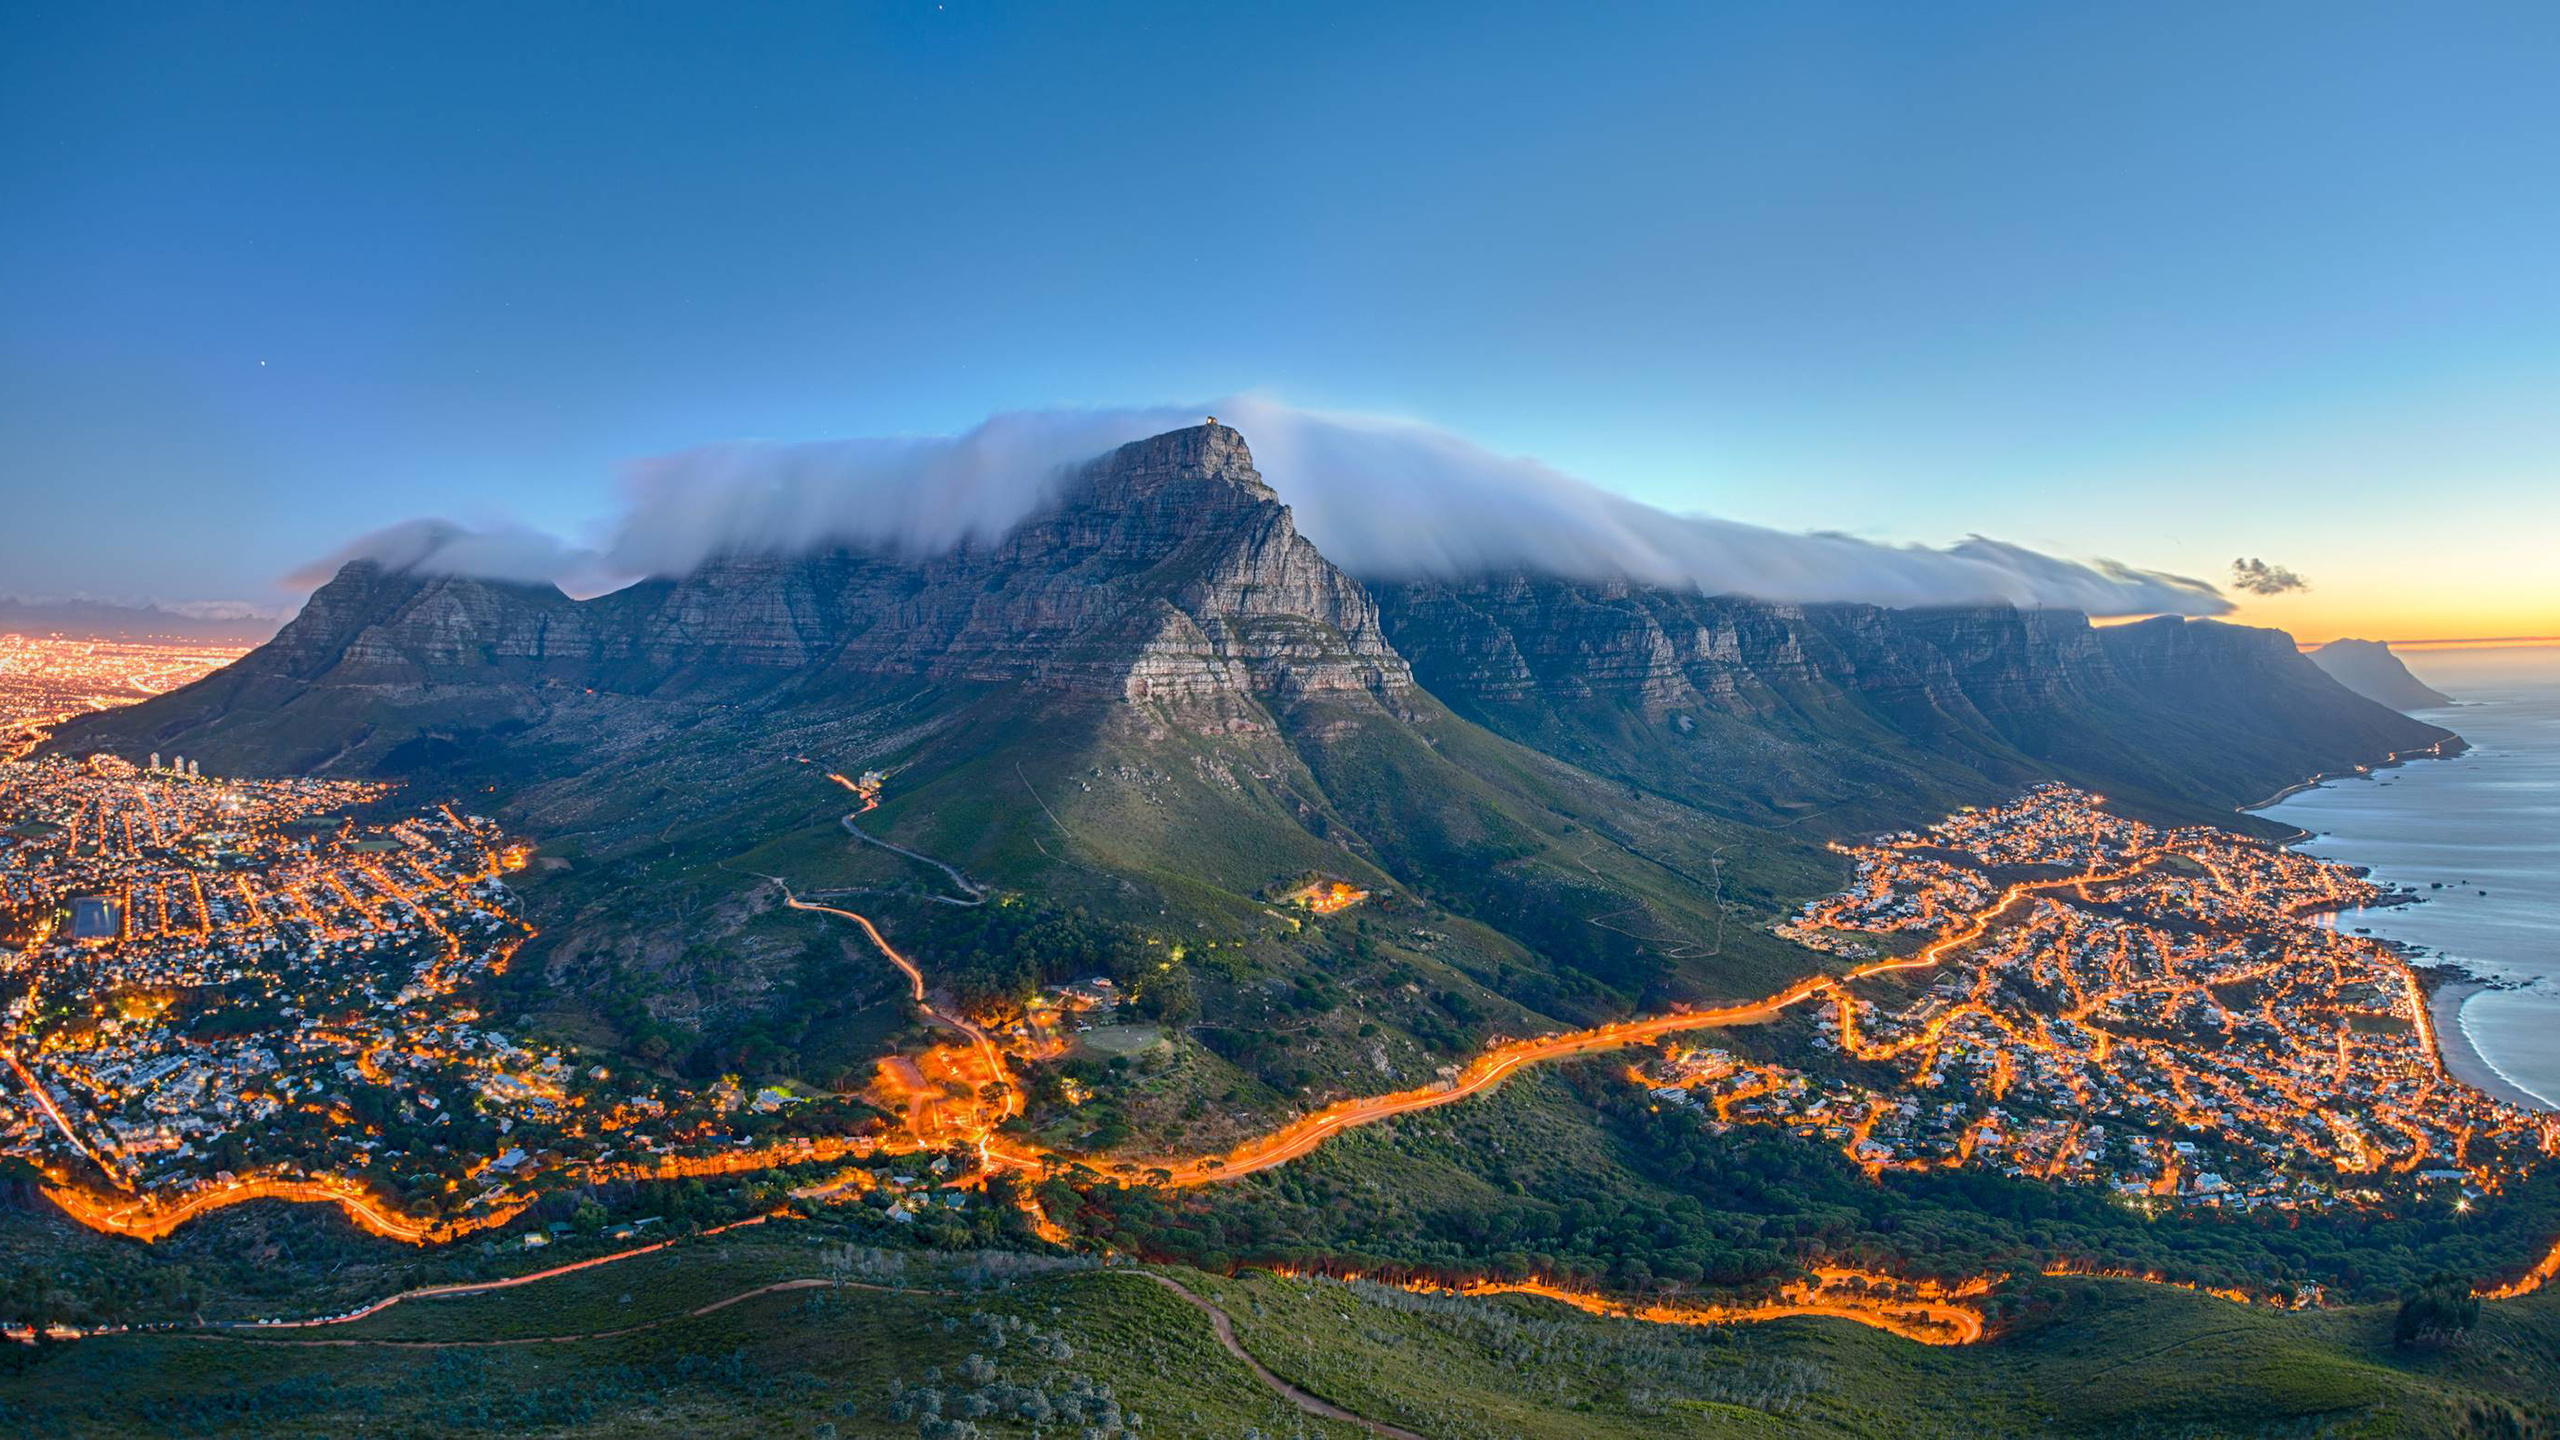 South Africa travels, HD wallpaper, Background image, 2560x1440 HD Desktop